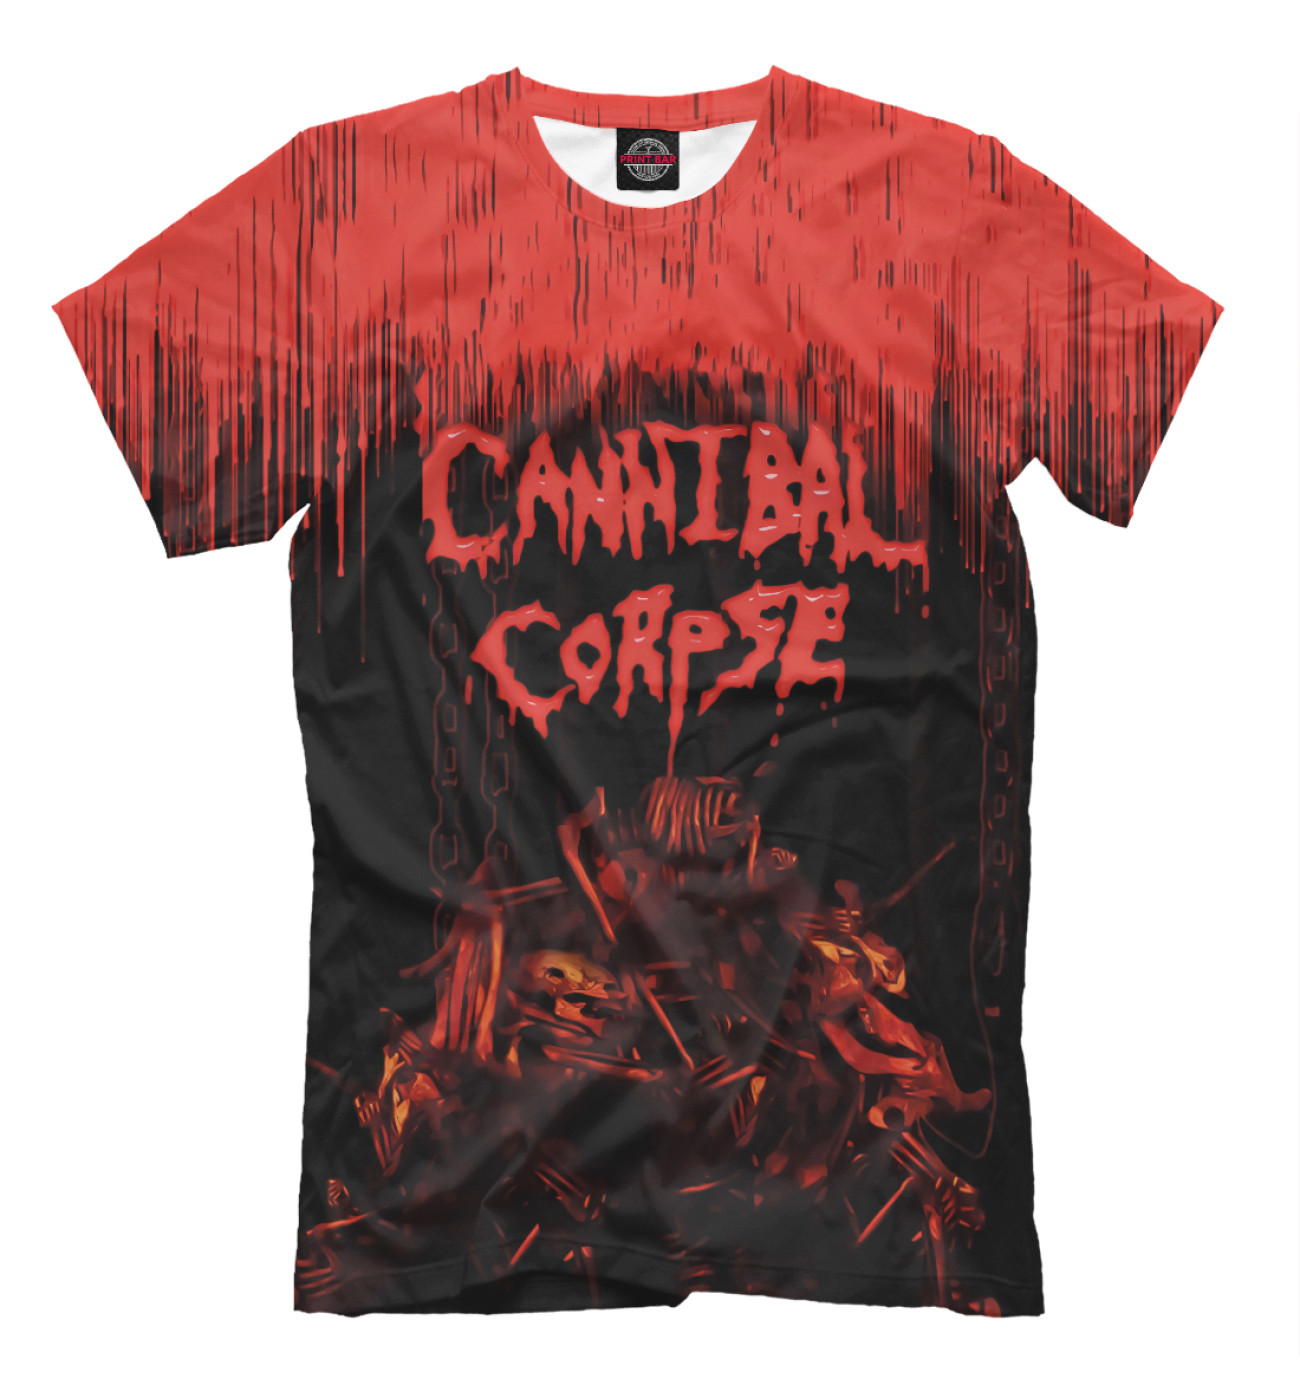 Мужская Футболка Cannibal Corpse, артикул: CCR-998404-fut-2